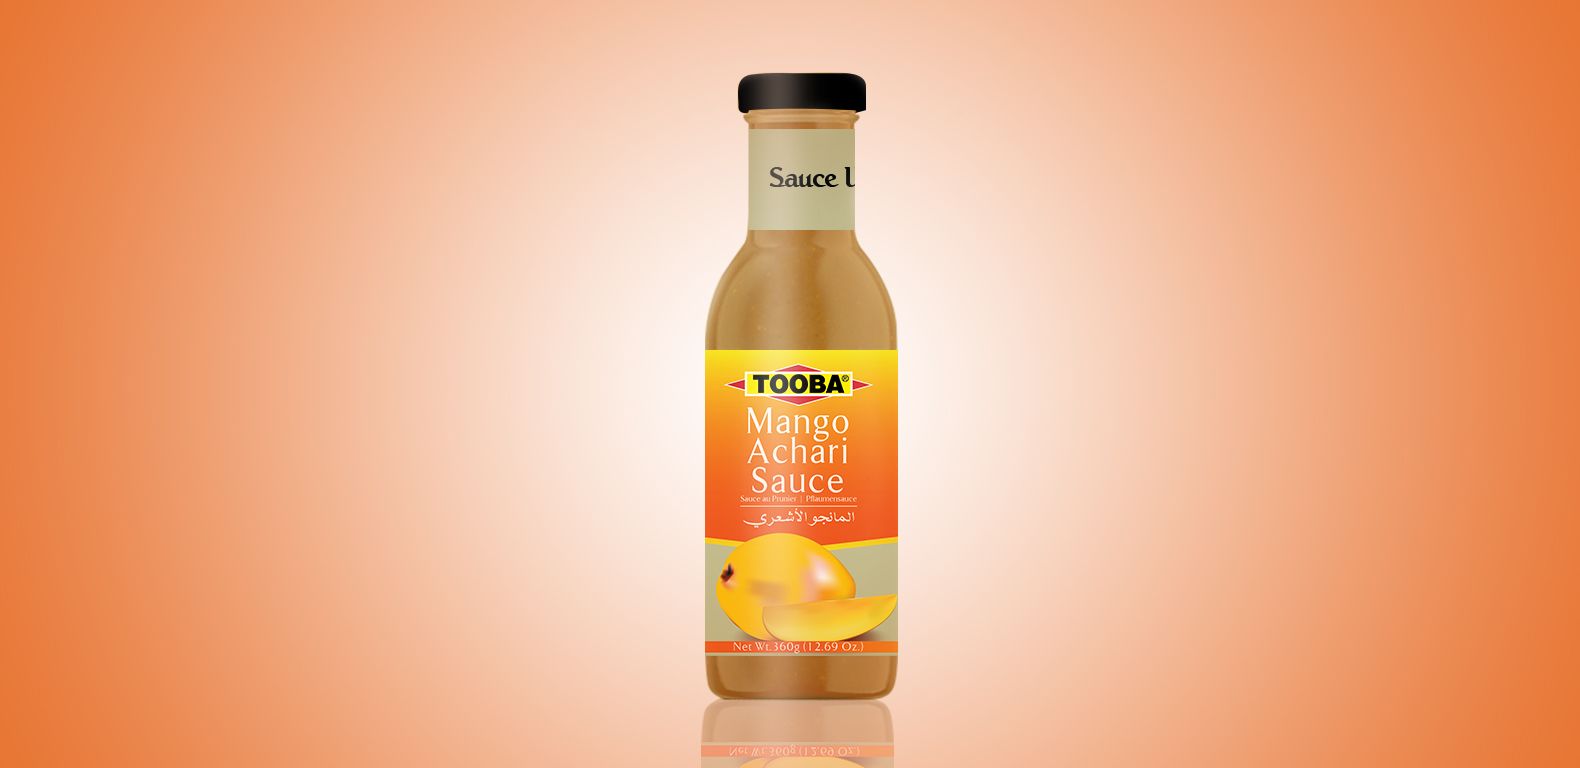 Packaging-Design-Tooba-Sauces-1580x768-Mango-Achari-Sauce